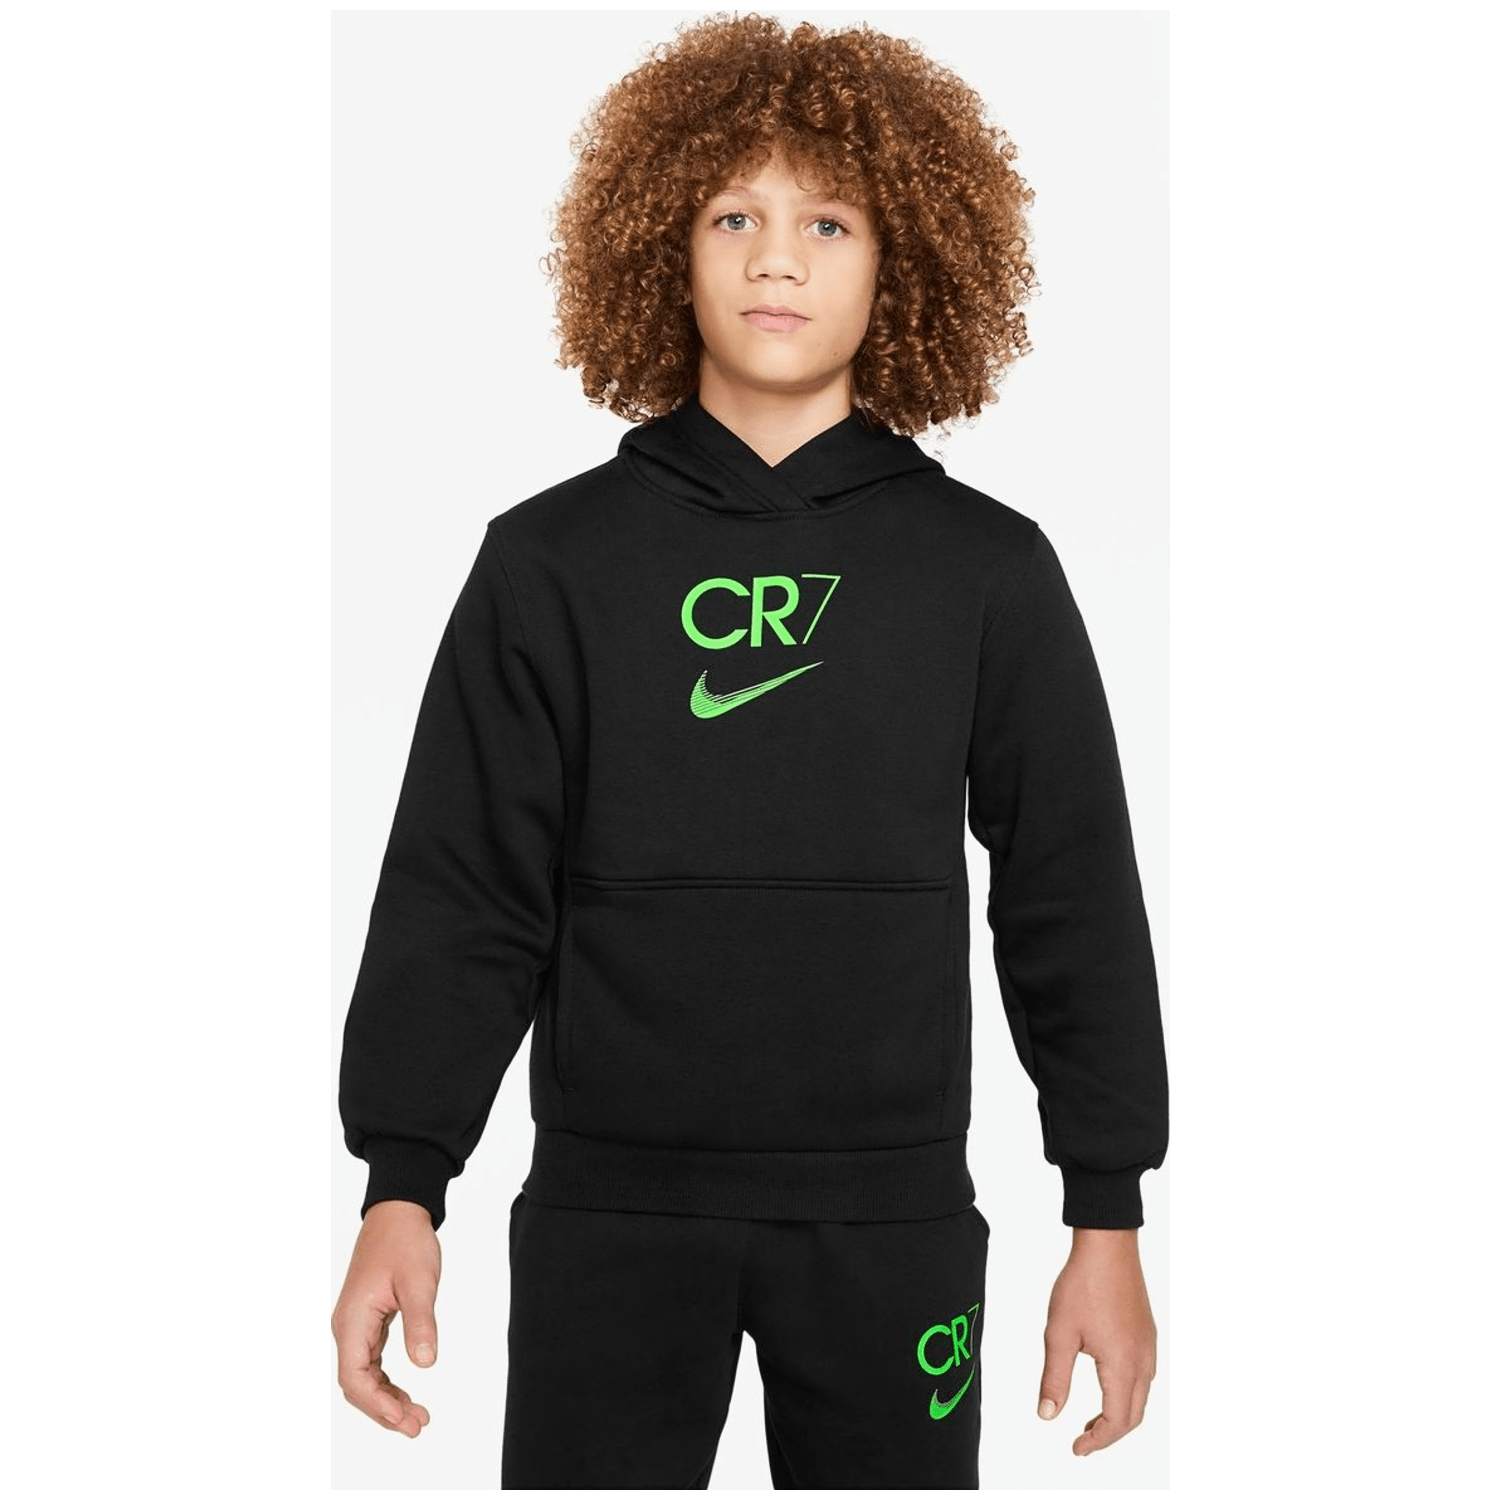 Nike Academy Player Edition:CR7 Club  Kinder Kapuzensweater